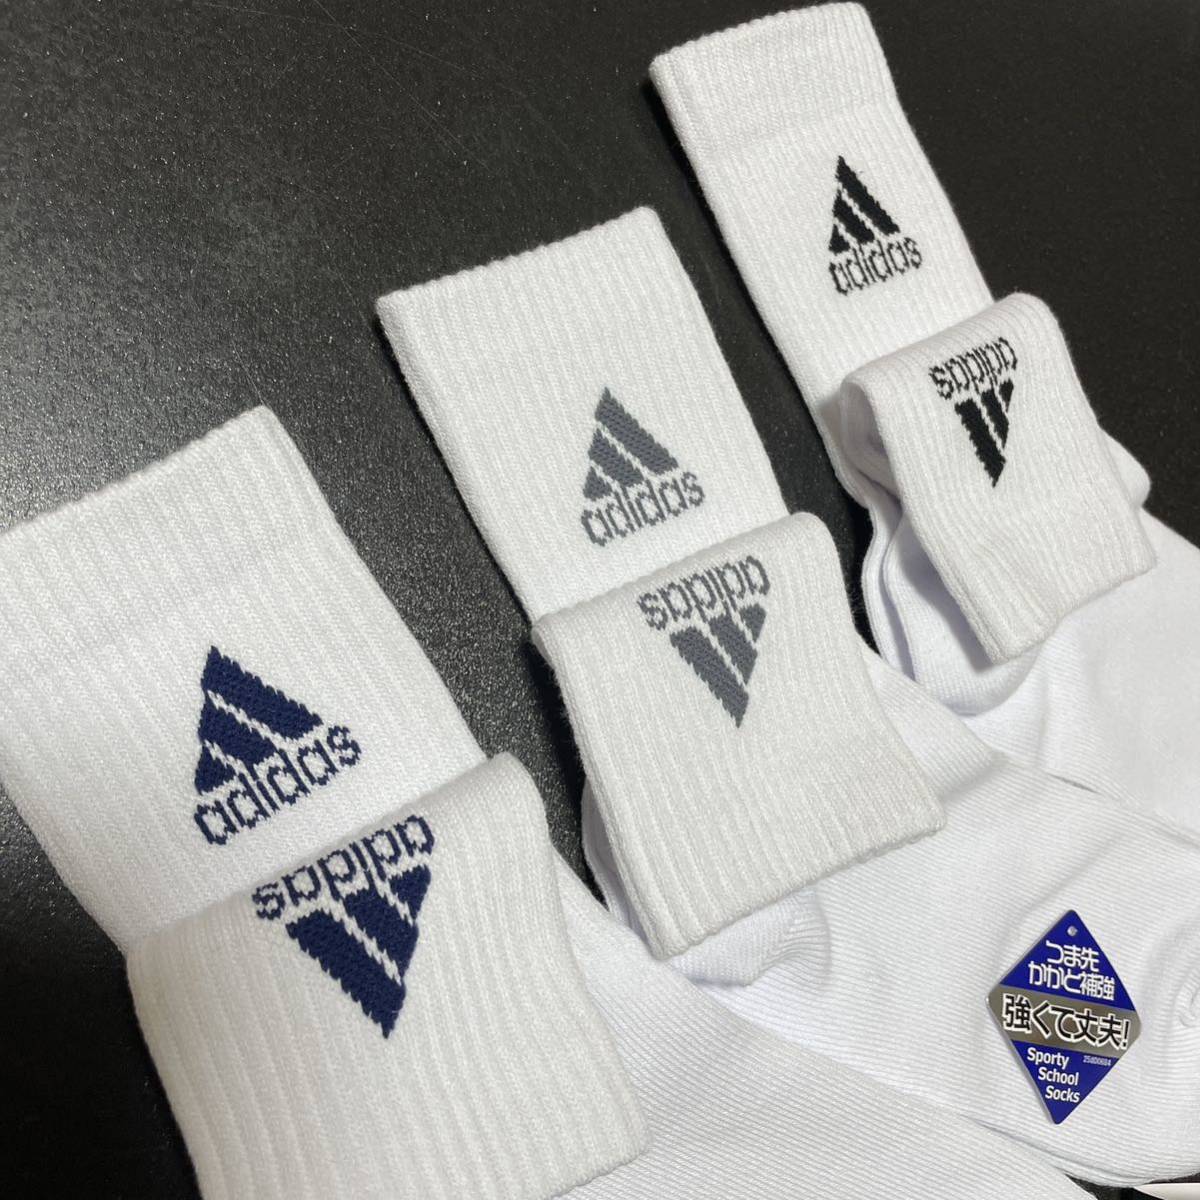  Adidas левый правый с логотипом носки school носки Short носки спорт носки 3 пар комплект 